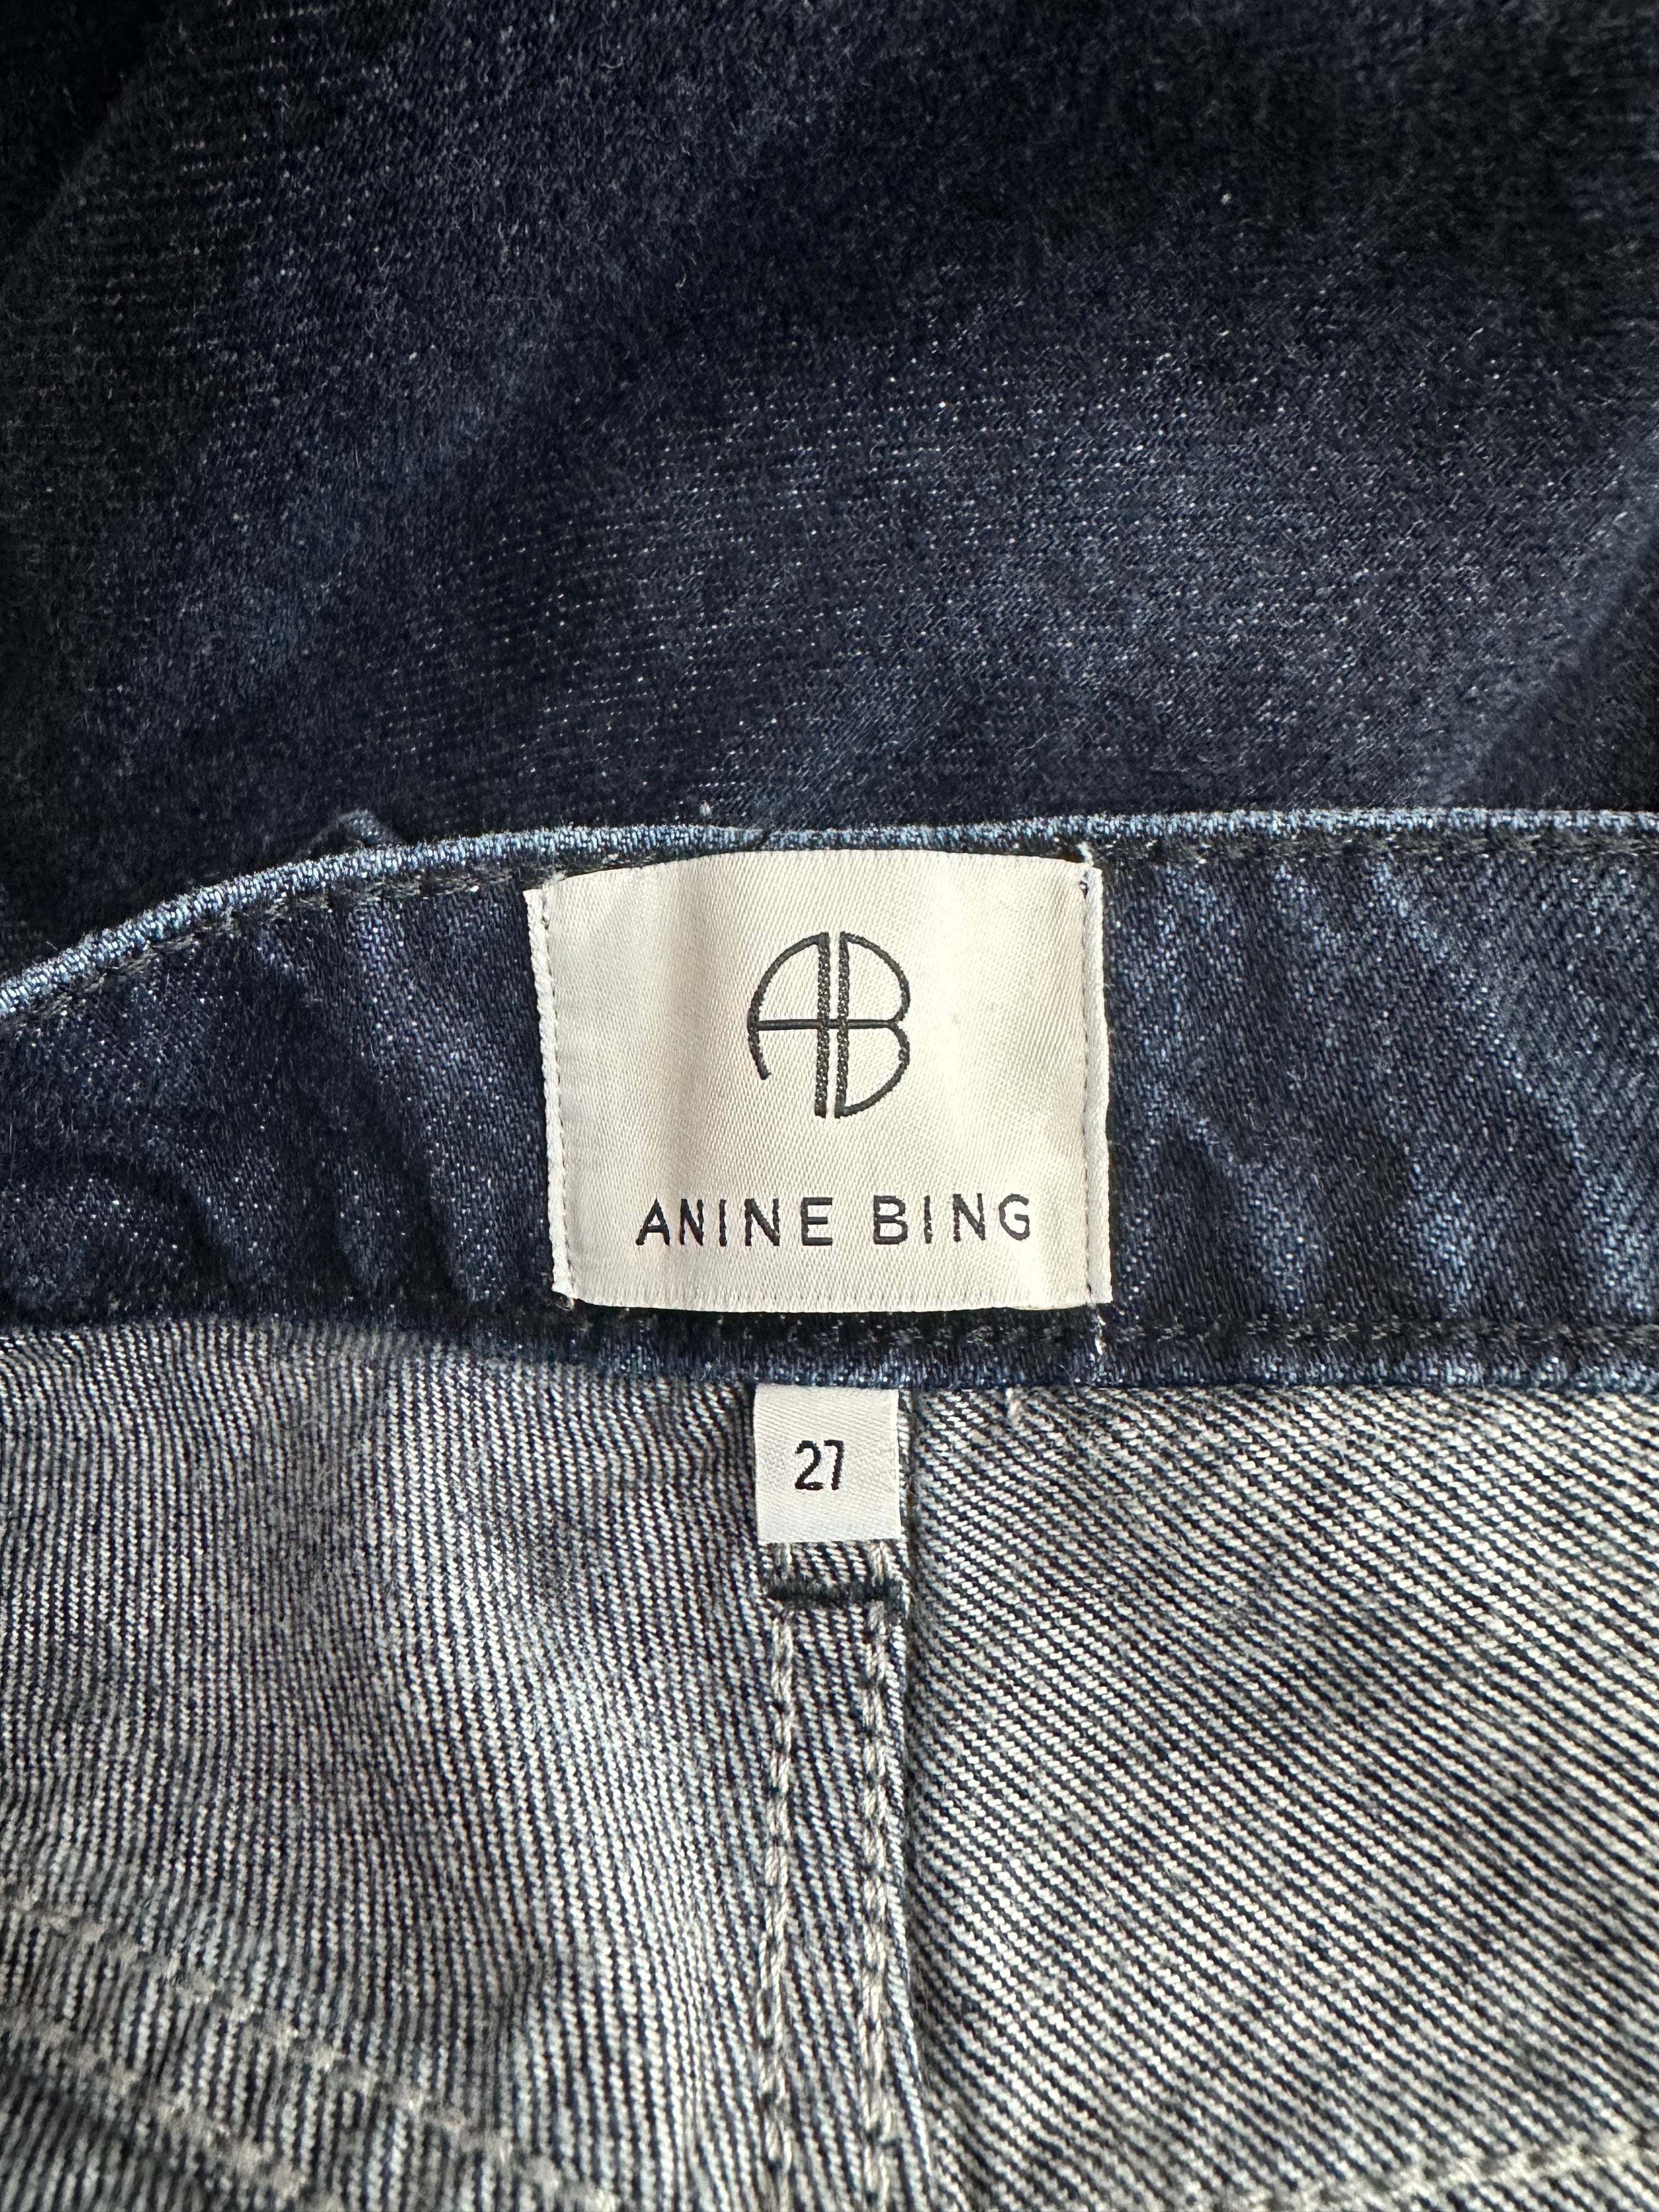 Anine Bing Jeans